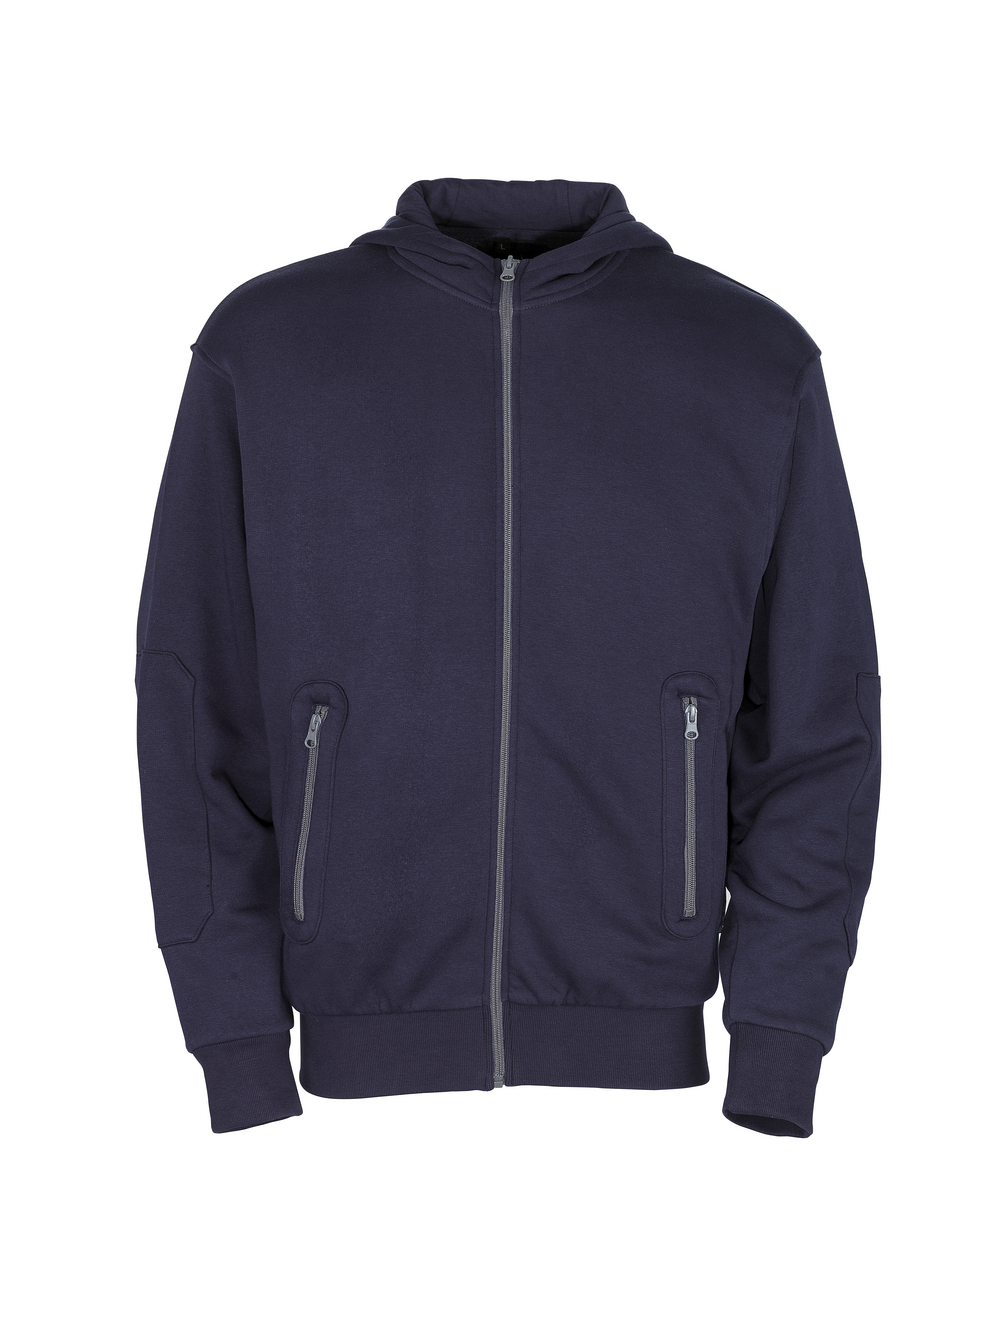 MASCOT-Workwear-Sweatshirt, Altea, MG310, marine